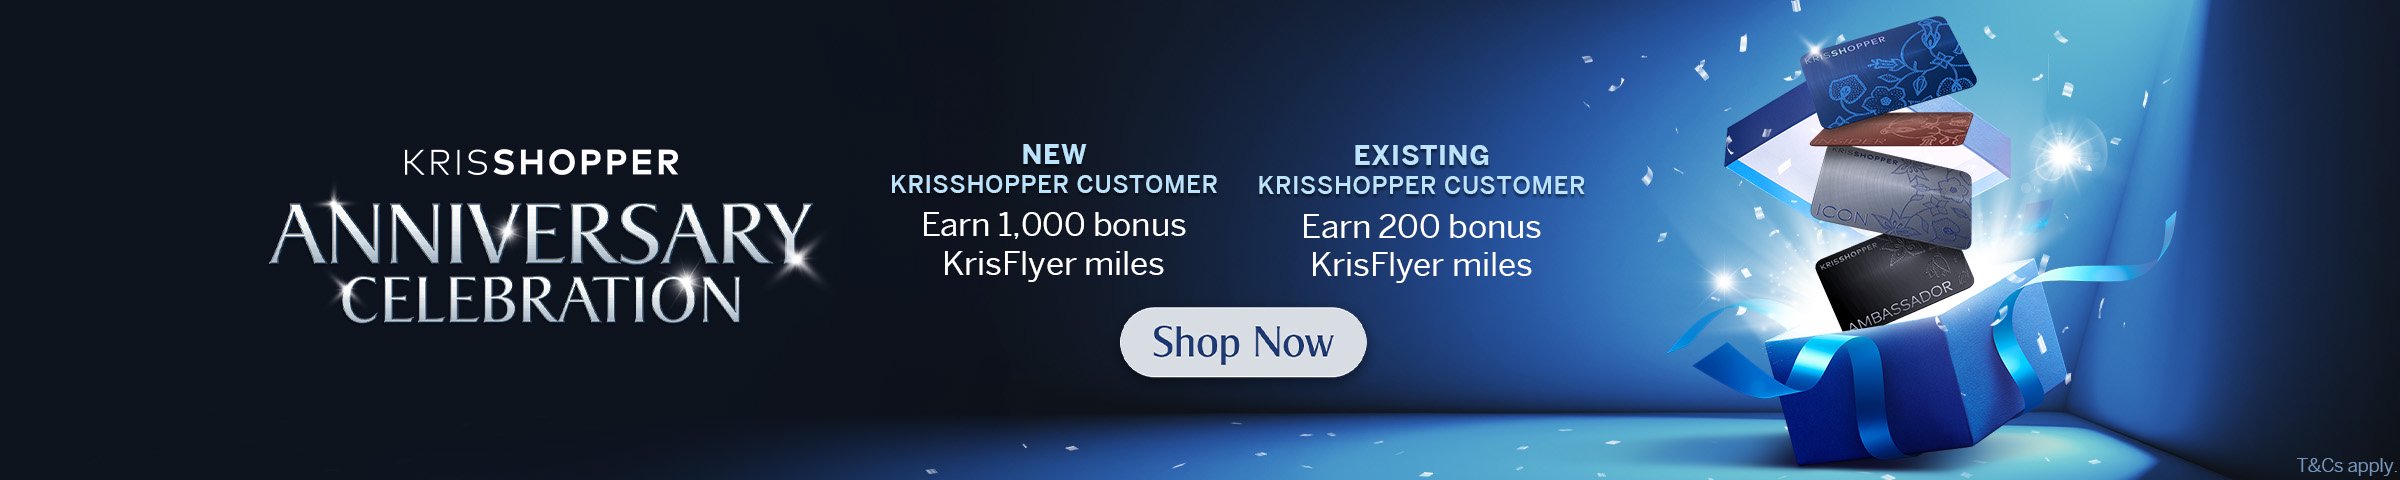 KrisShopper Anniversary Celebration